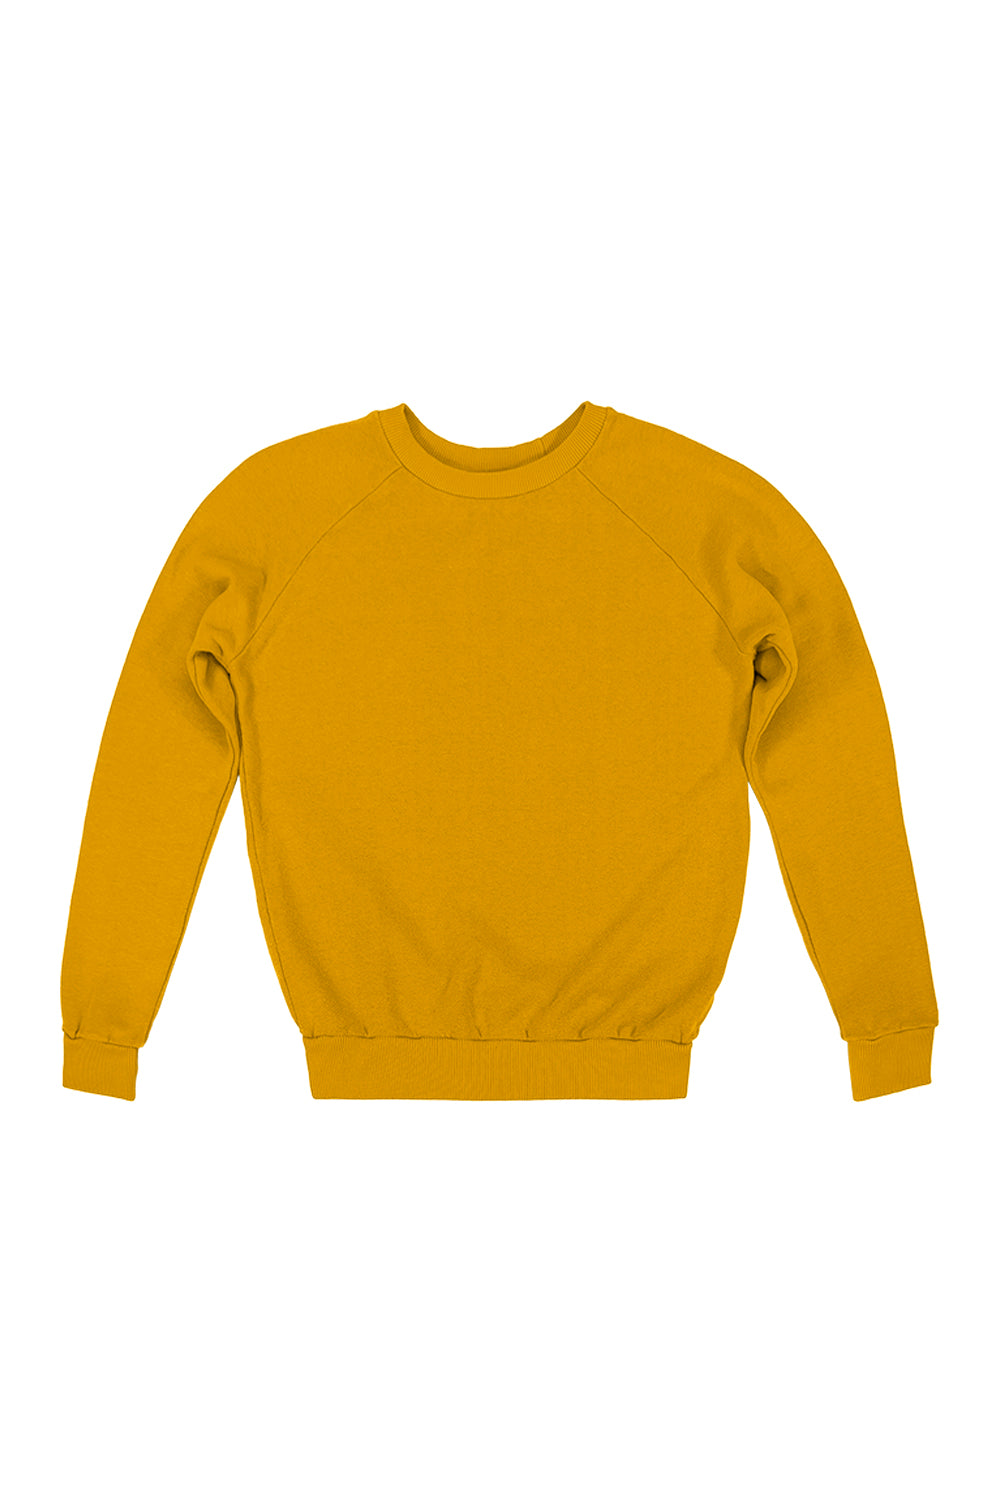 Alpine Raglan | Jungmaven Hemp Clothing & Accessories / Color: Spicy Mustard